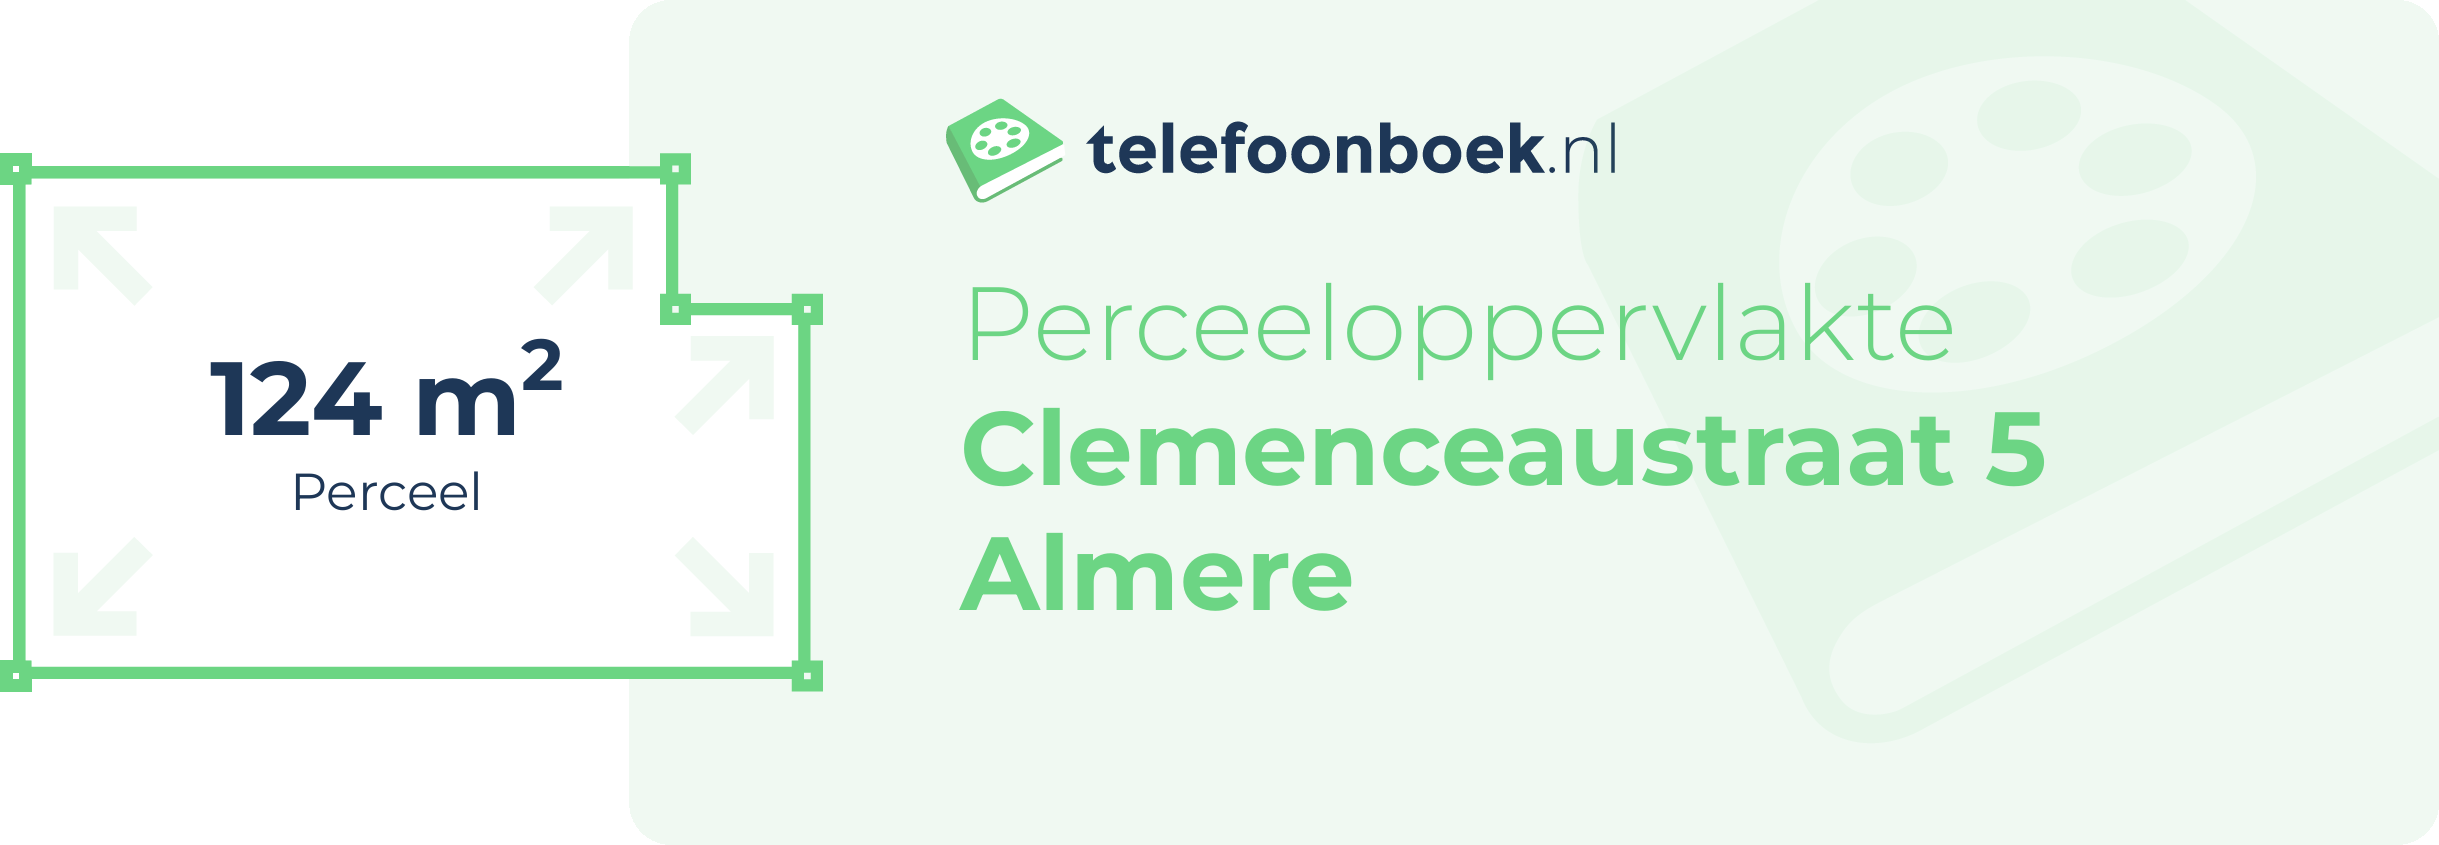 Perceeloppervlakte Clemenceaustraat 5 Almere